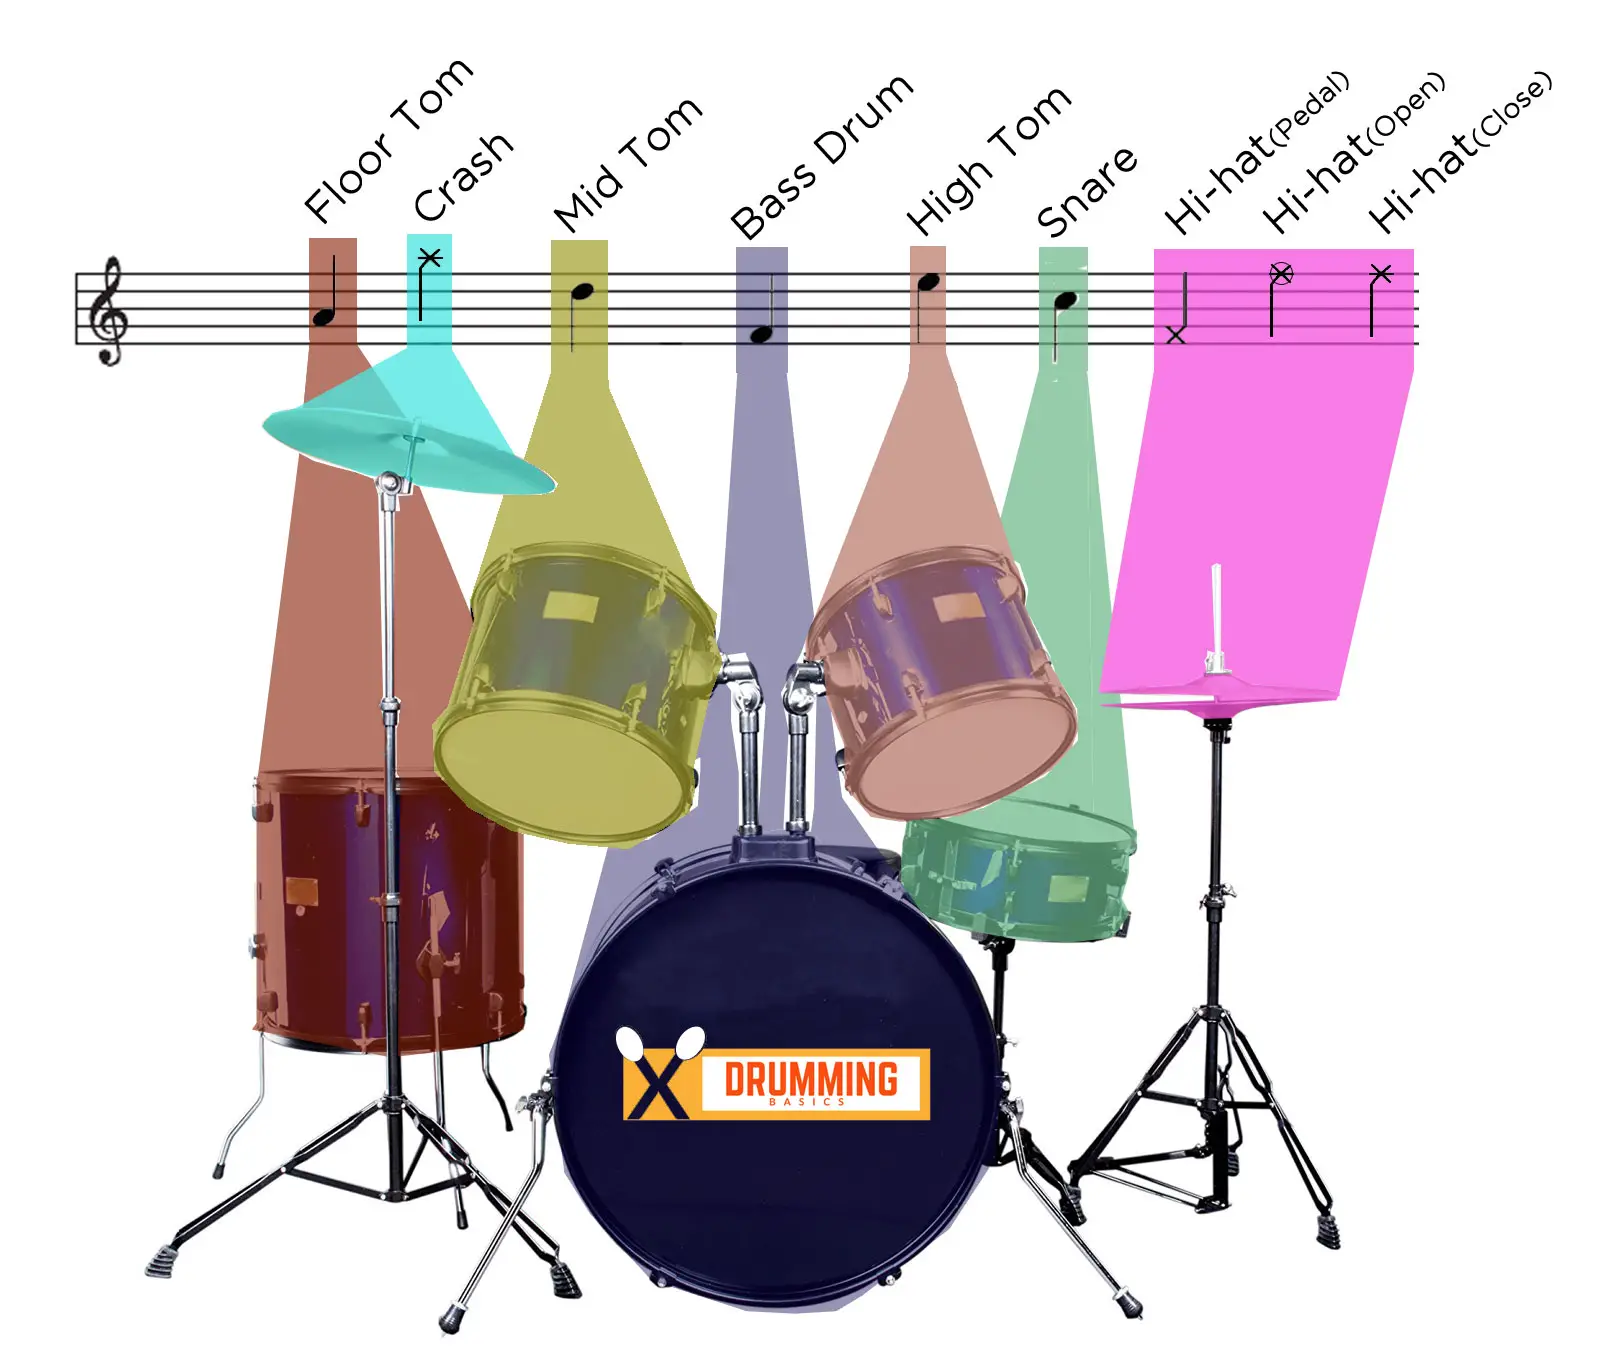 How to read Drum Score - Drumming Basics